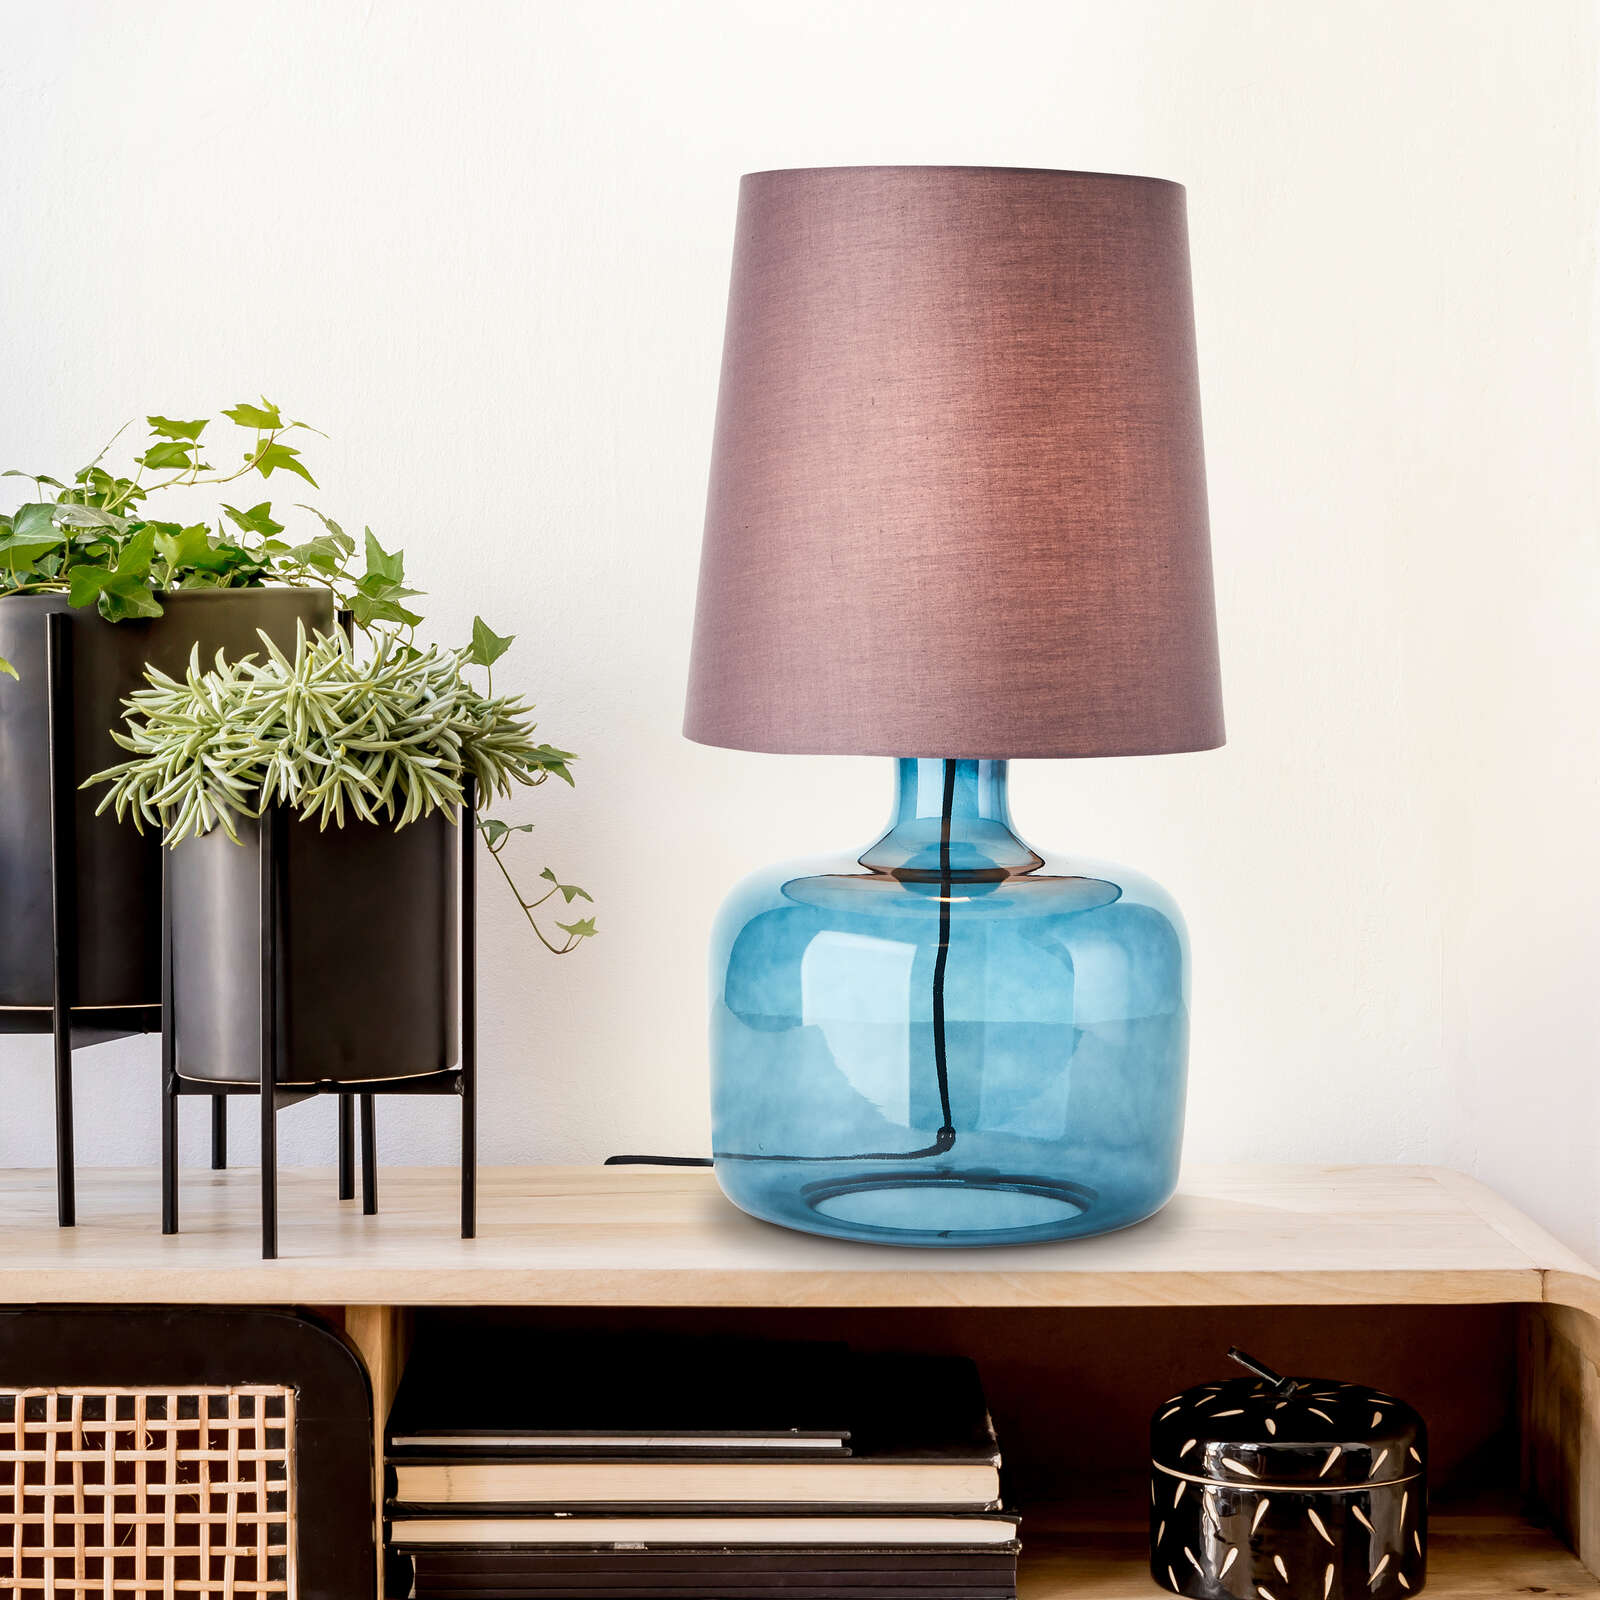             Lámpara de mesa textil - Jana 3 - Azul
        